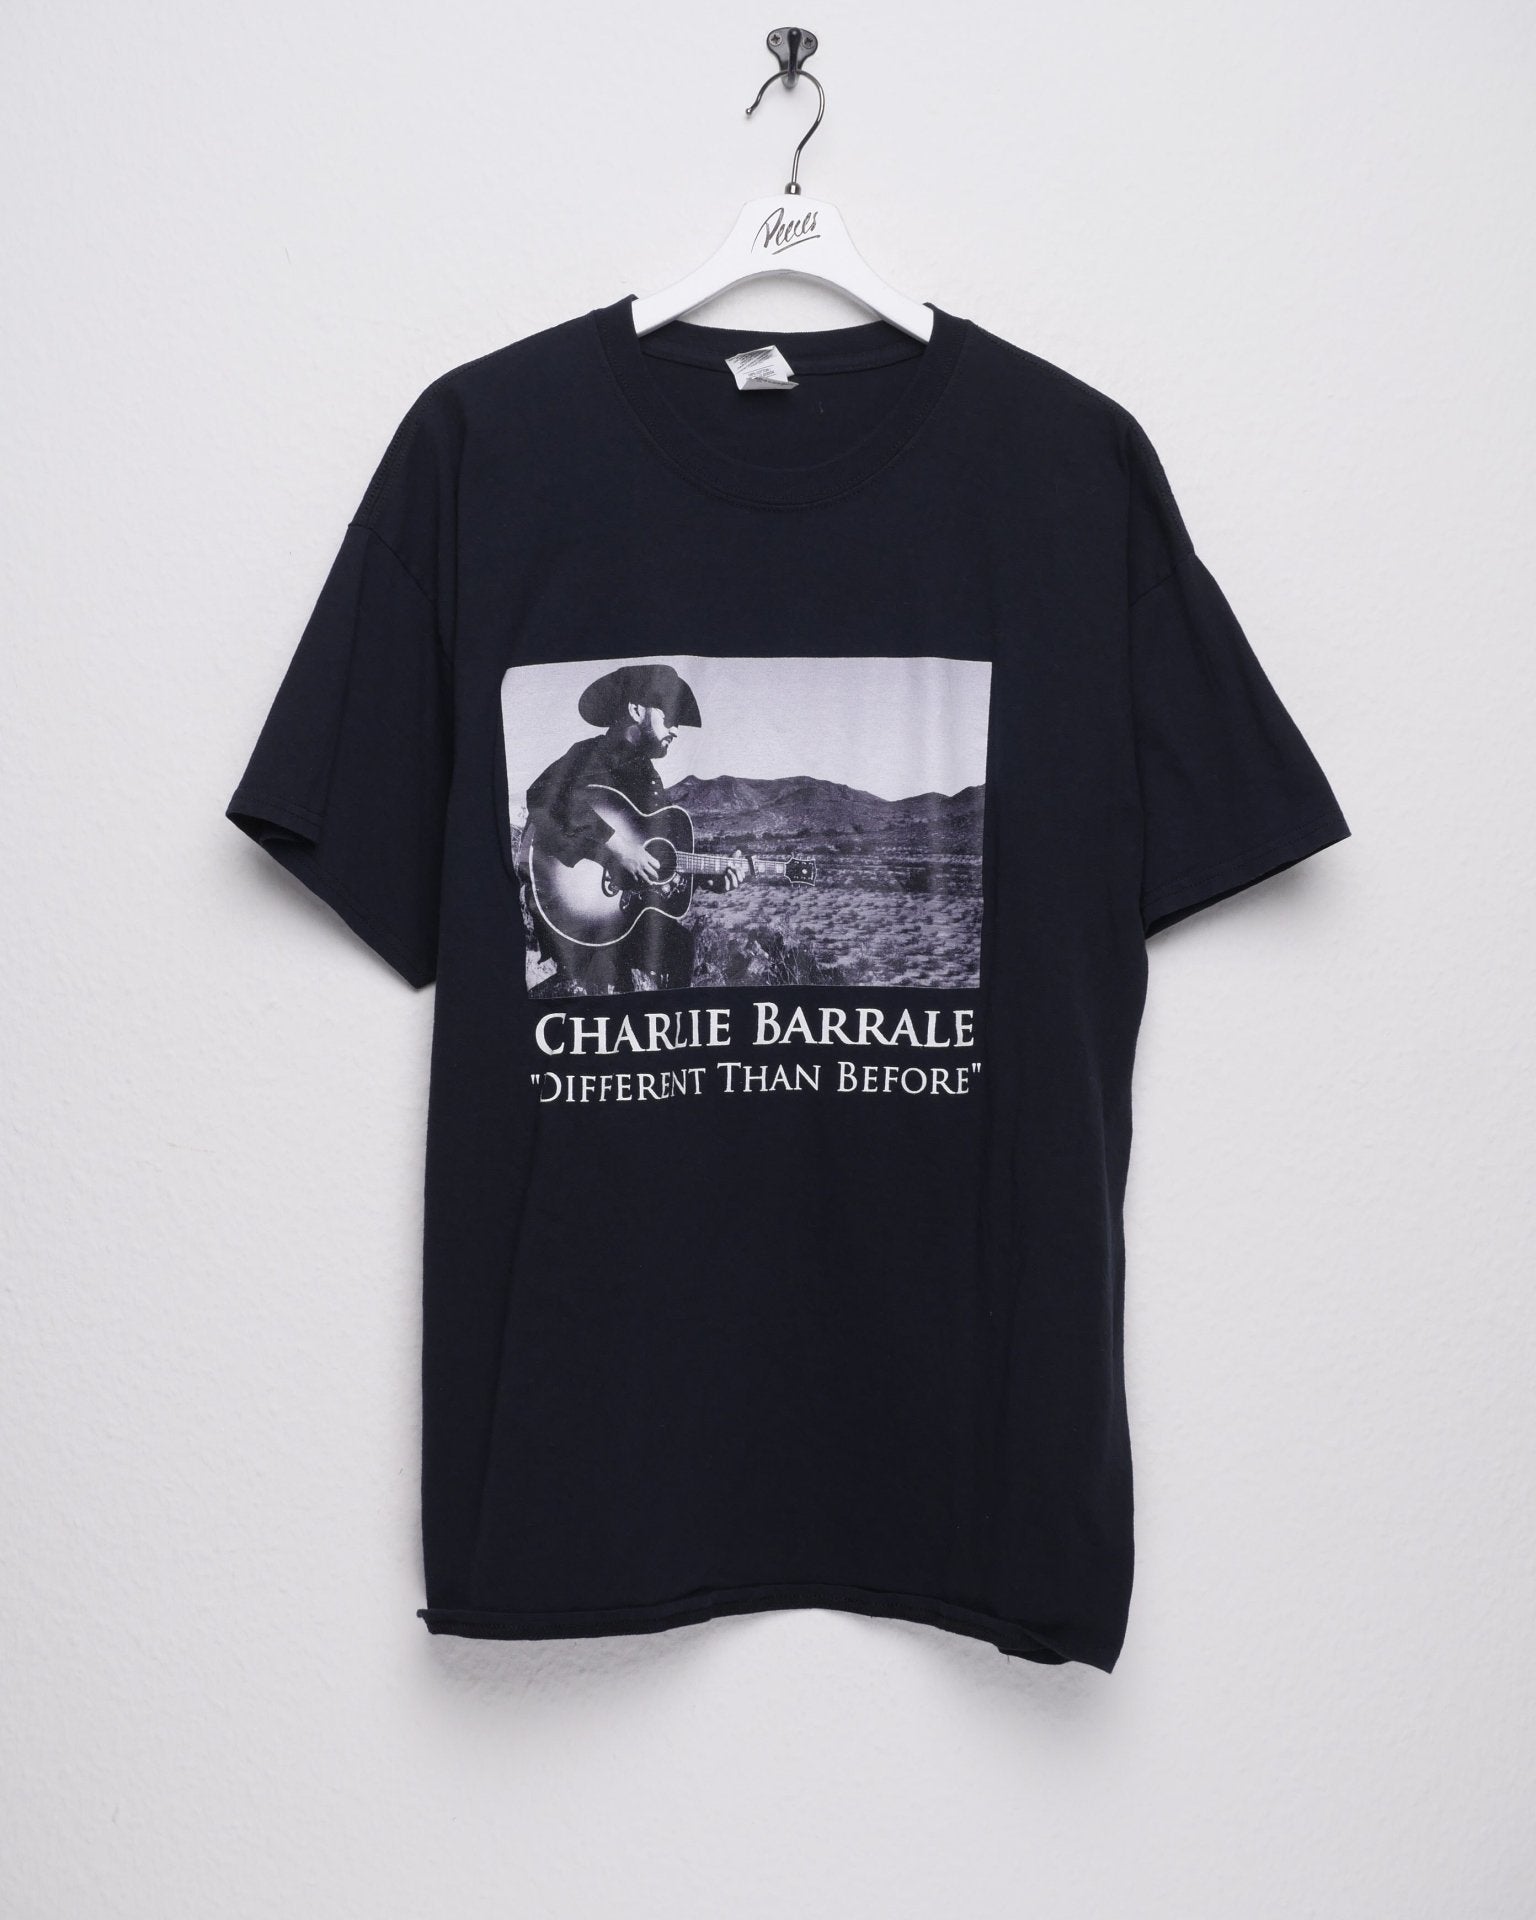 gildan printed 'Charlie Barrale' Graphic black Shirt - Peeces